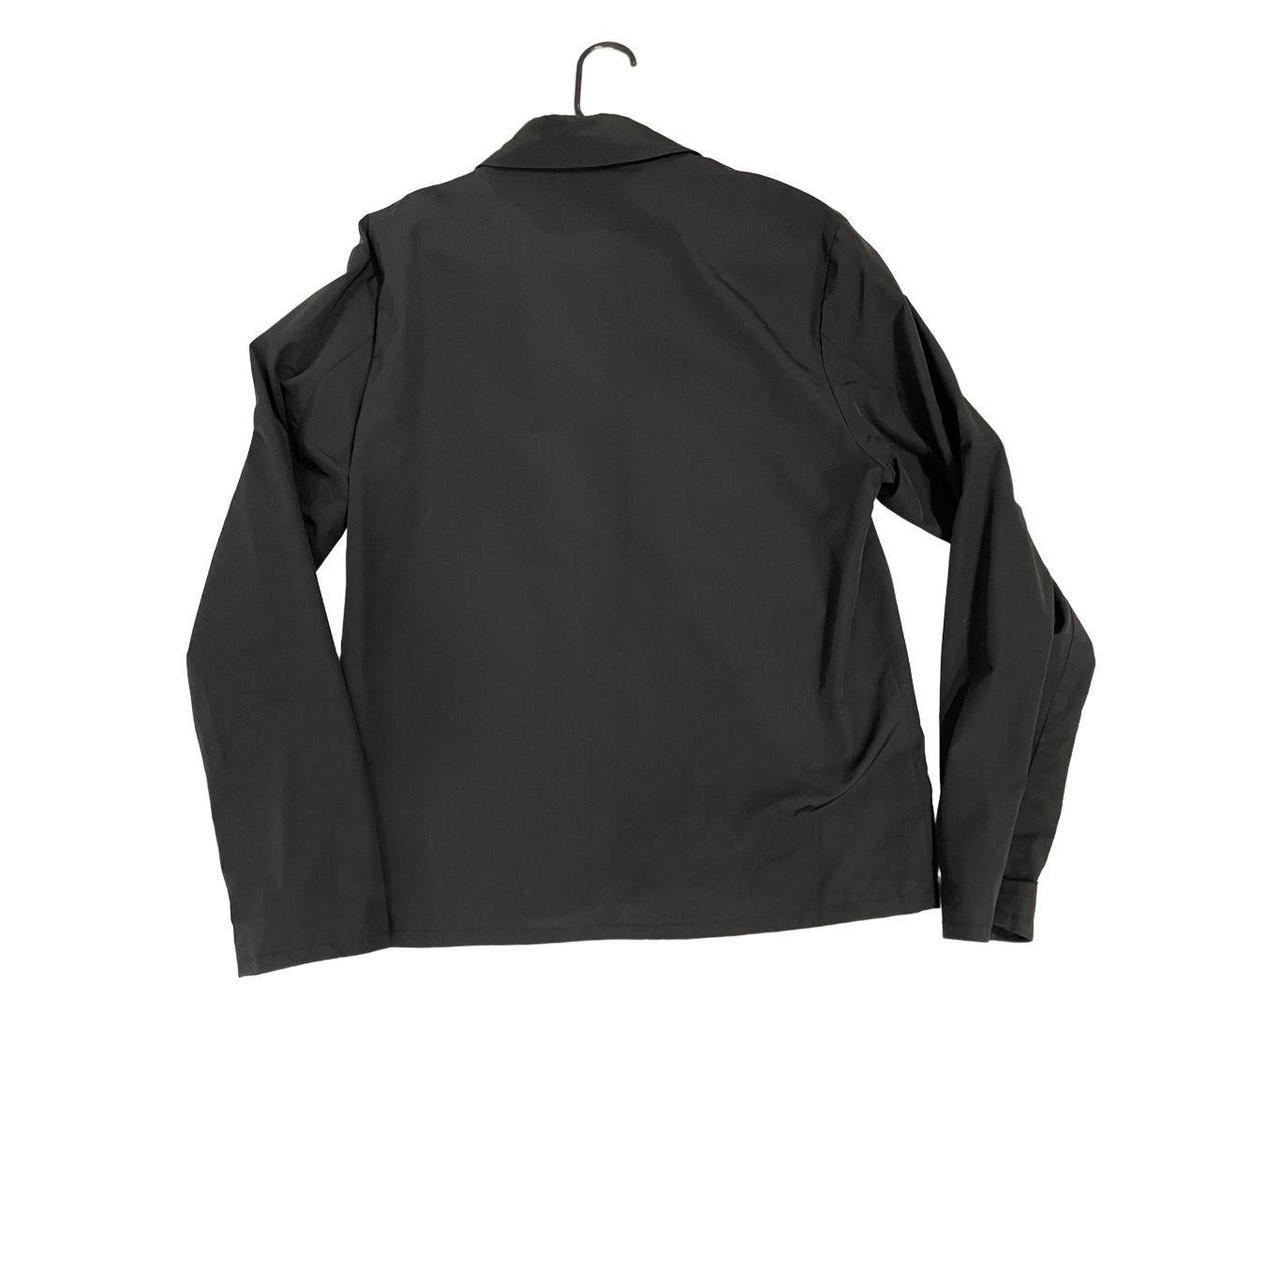 Light weight Calvin Kline jacket. Perfect for the... - Depop